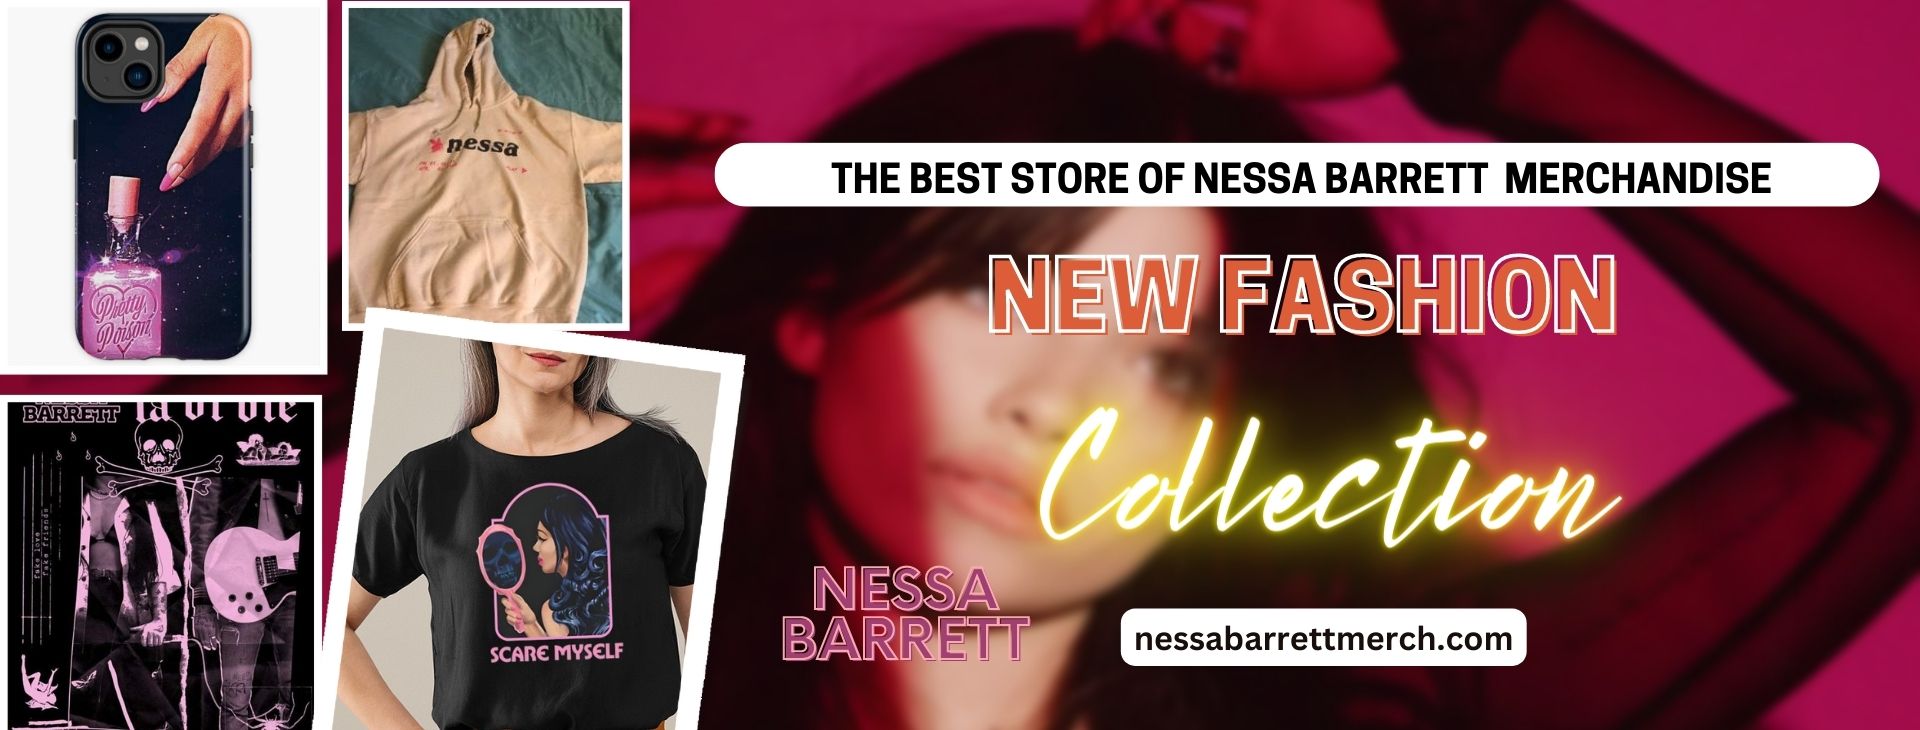 No edit nessa barrett banner - Nessa Barrett Store